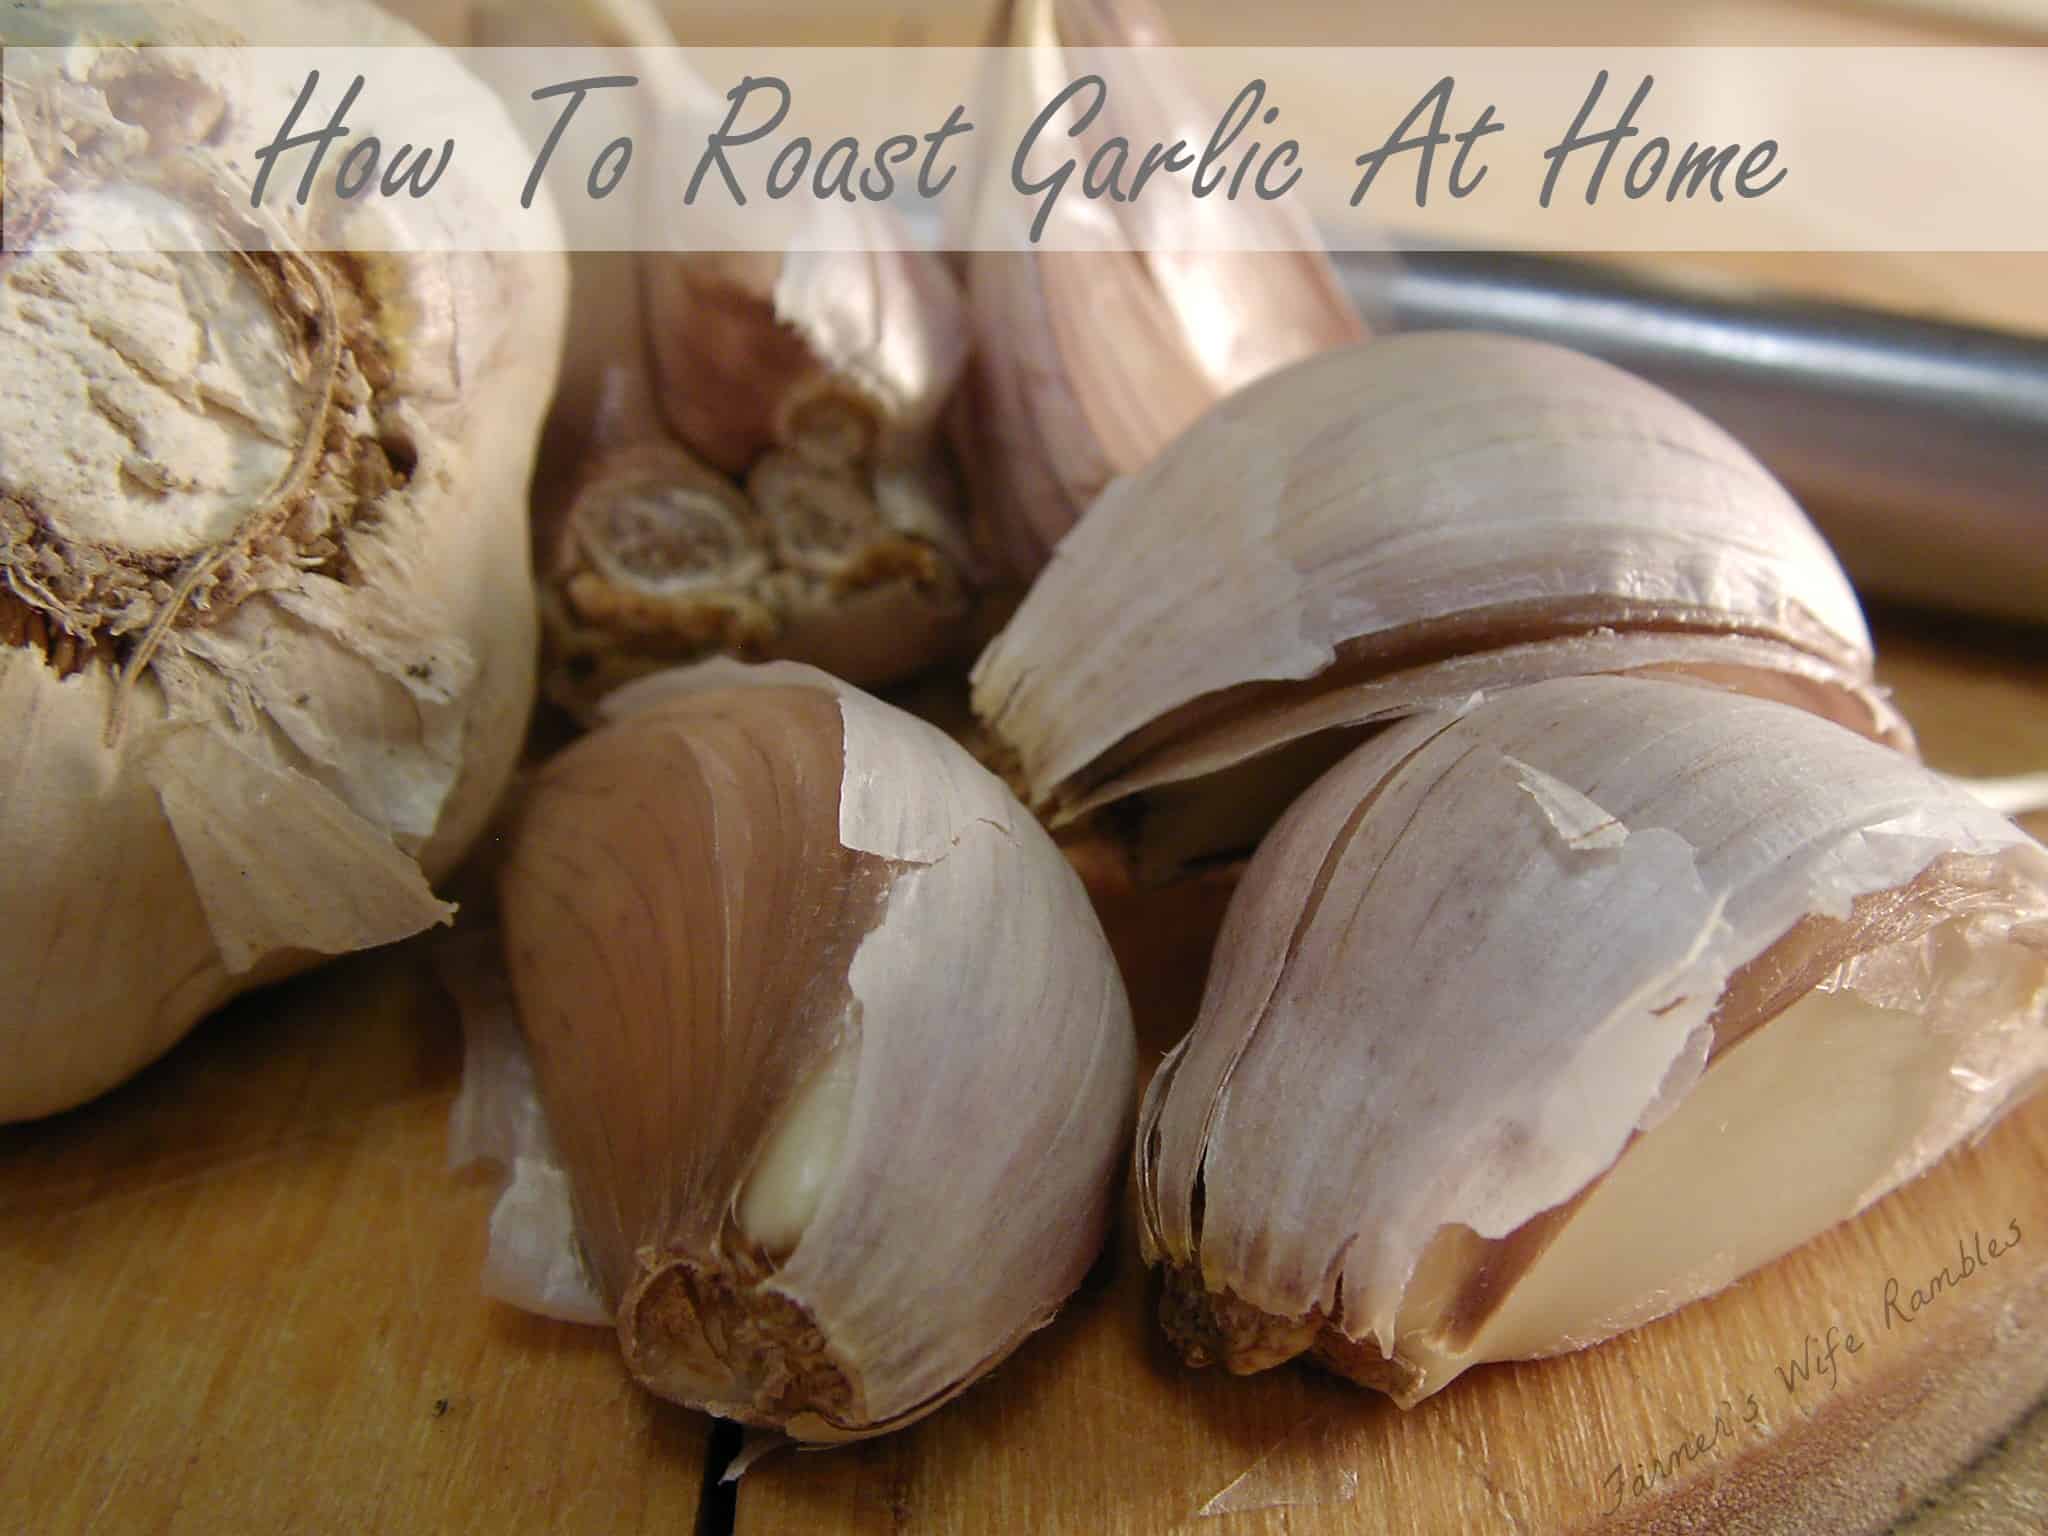 How To Roast Garlic